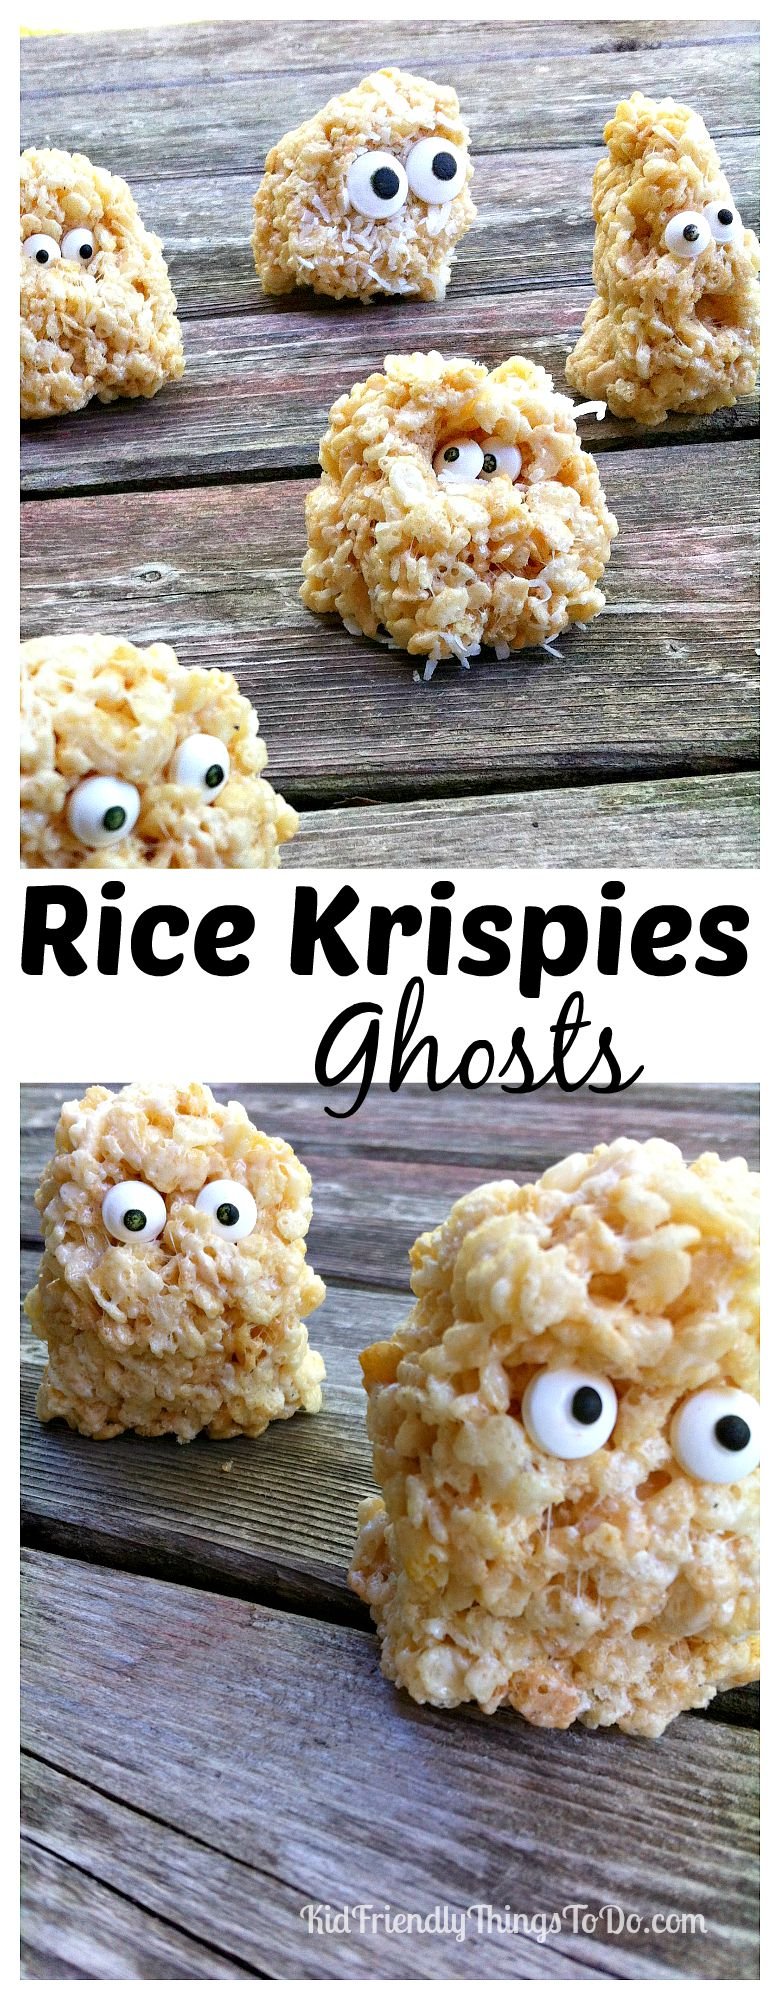 Rice Krispies Treats Ghosts - A Halloween or Hotel Transylvania Fun Food - KidFriendlyThingsToDo.com